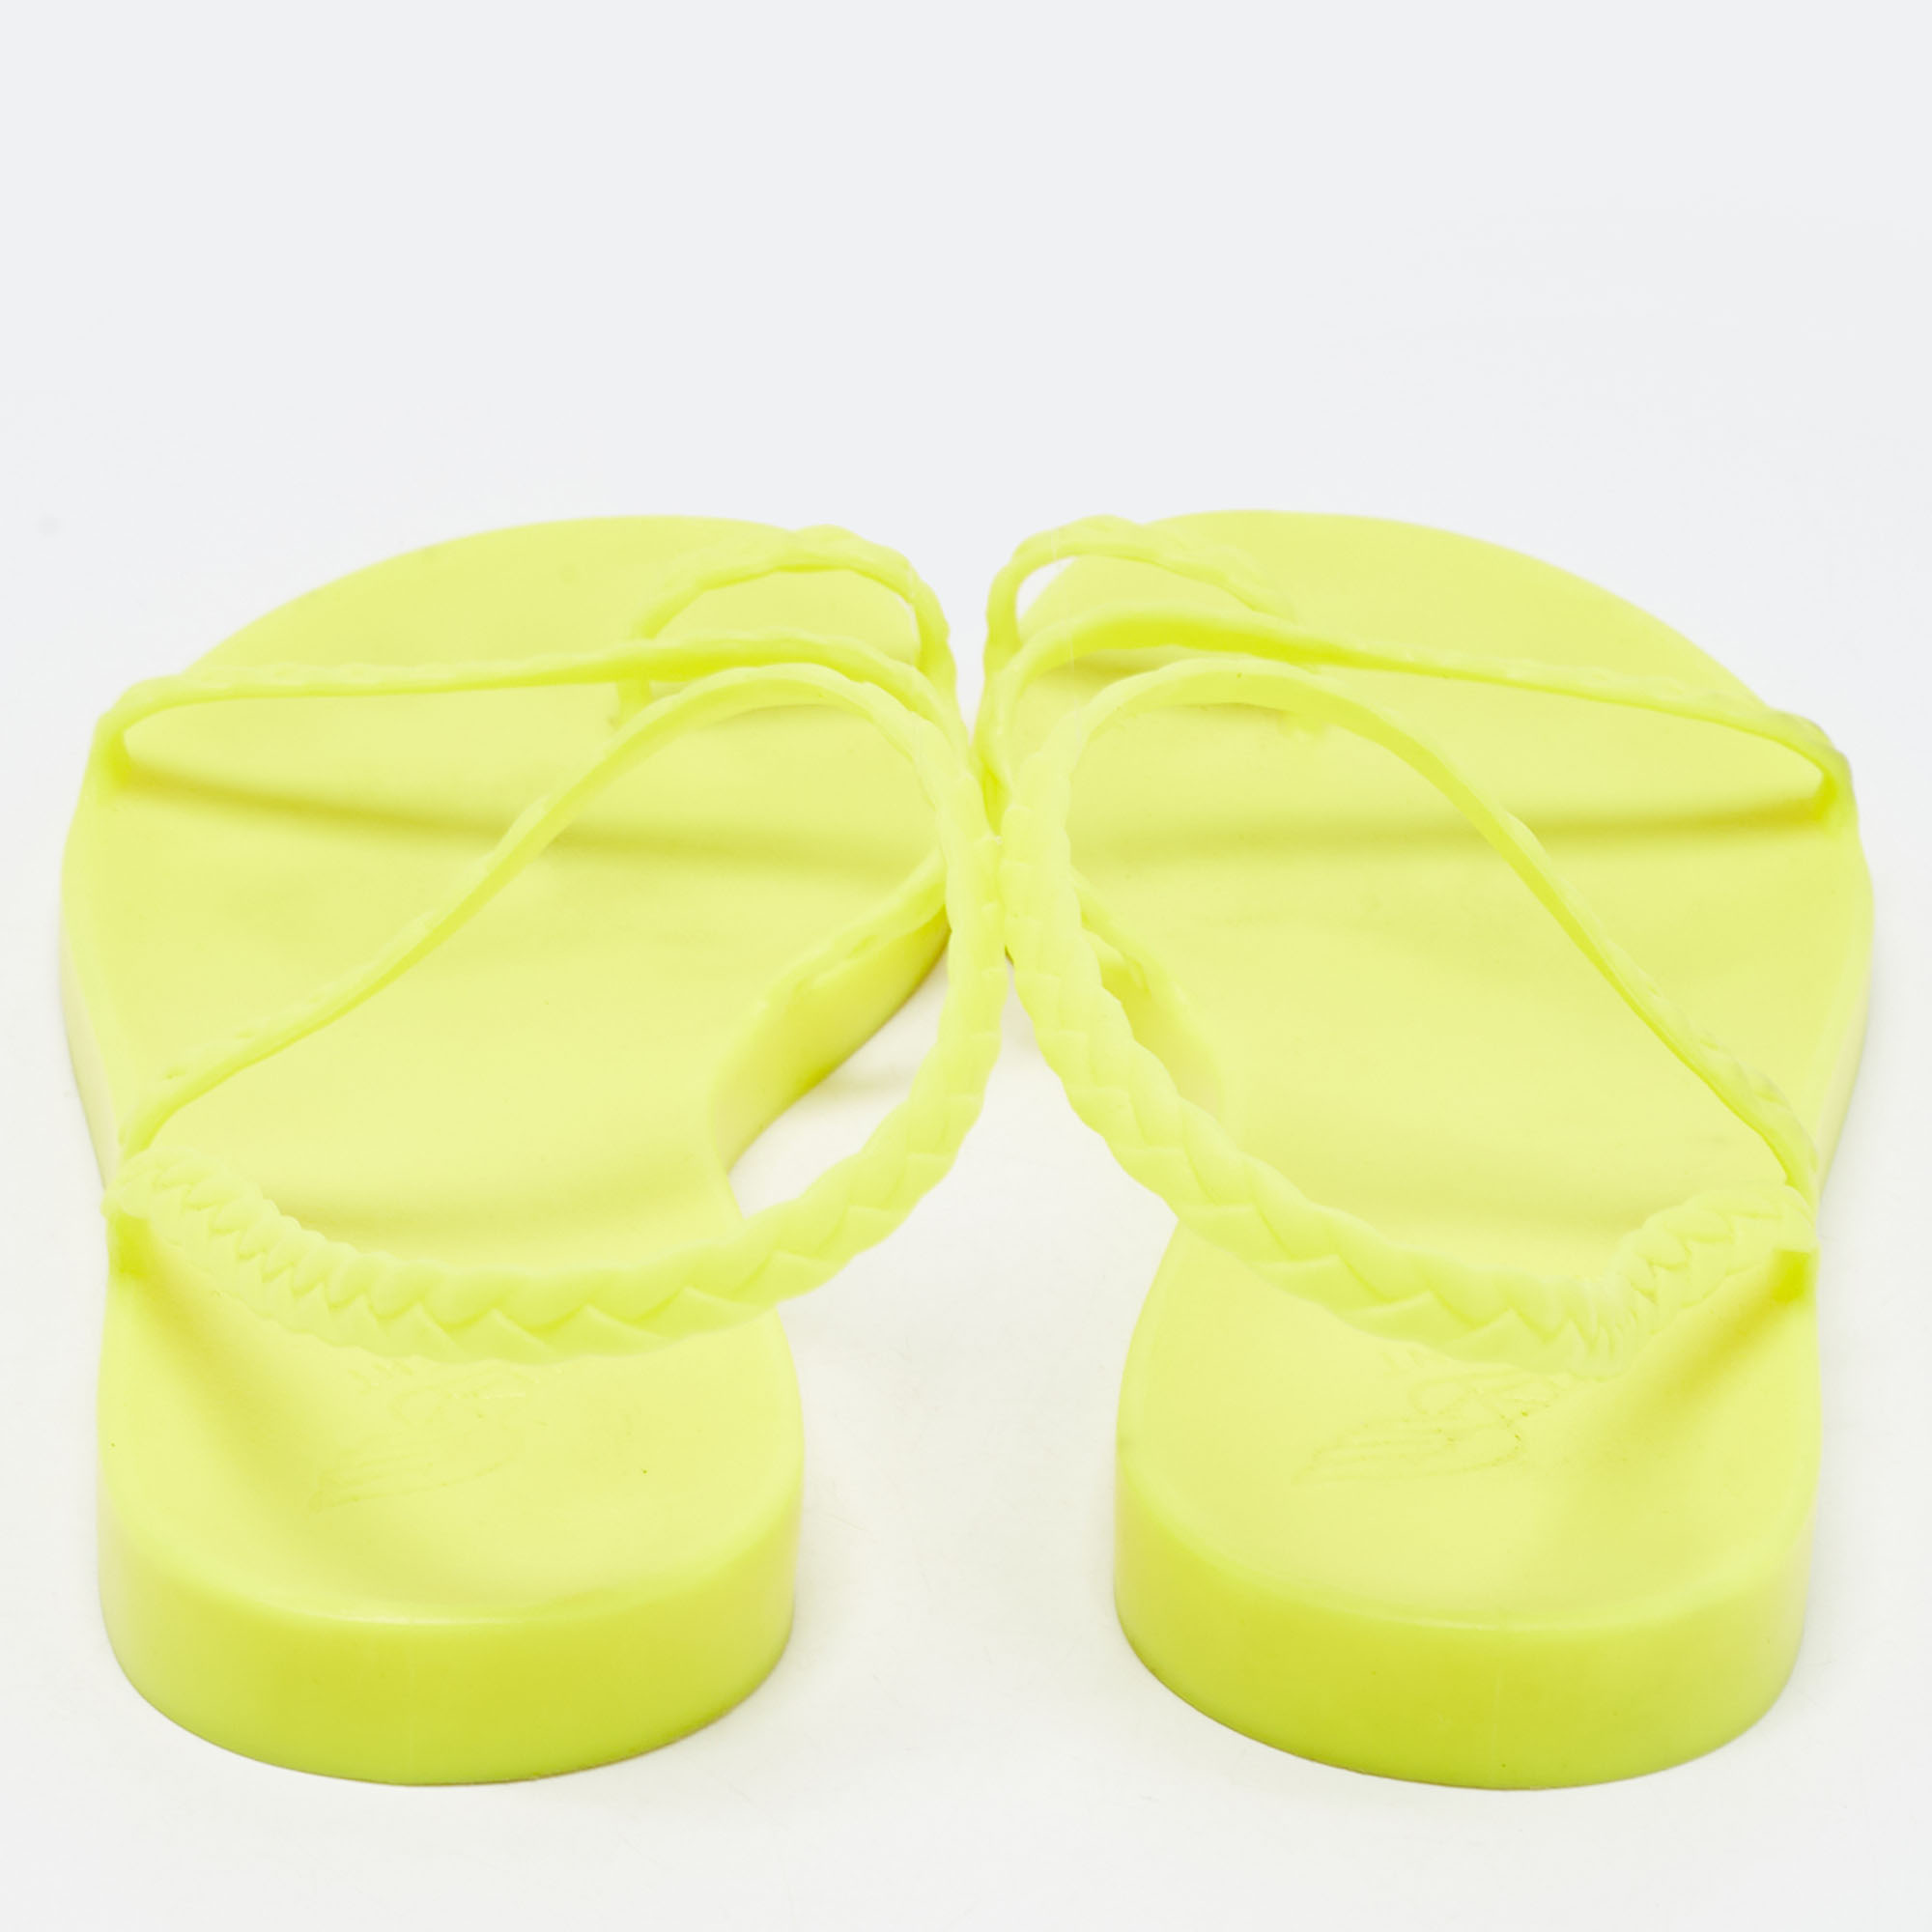 Ancient Greek Sandals Neon Yellow Rubber Eleftheria Flat Sandals Size 38